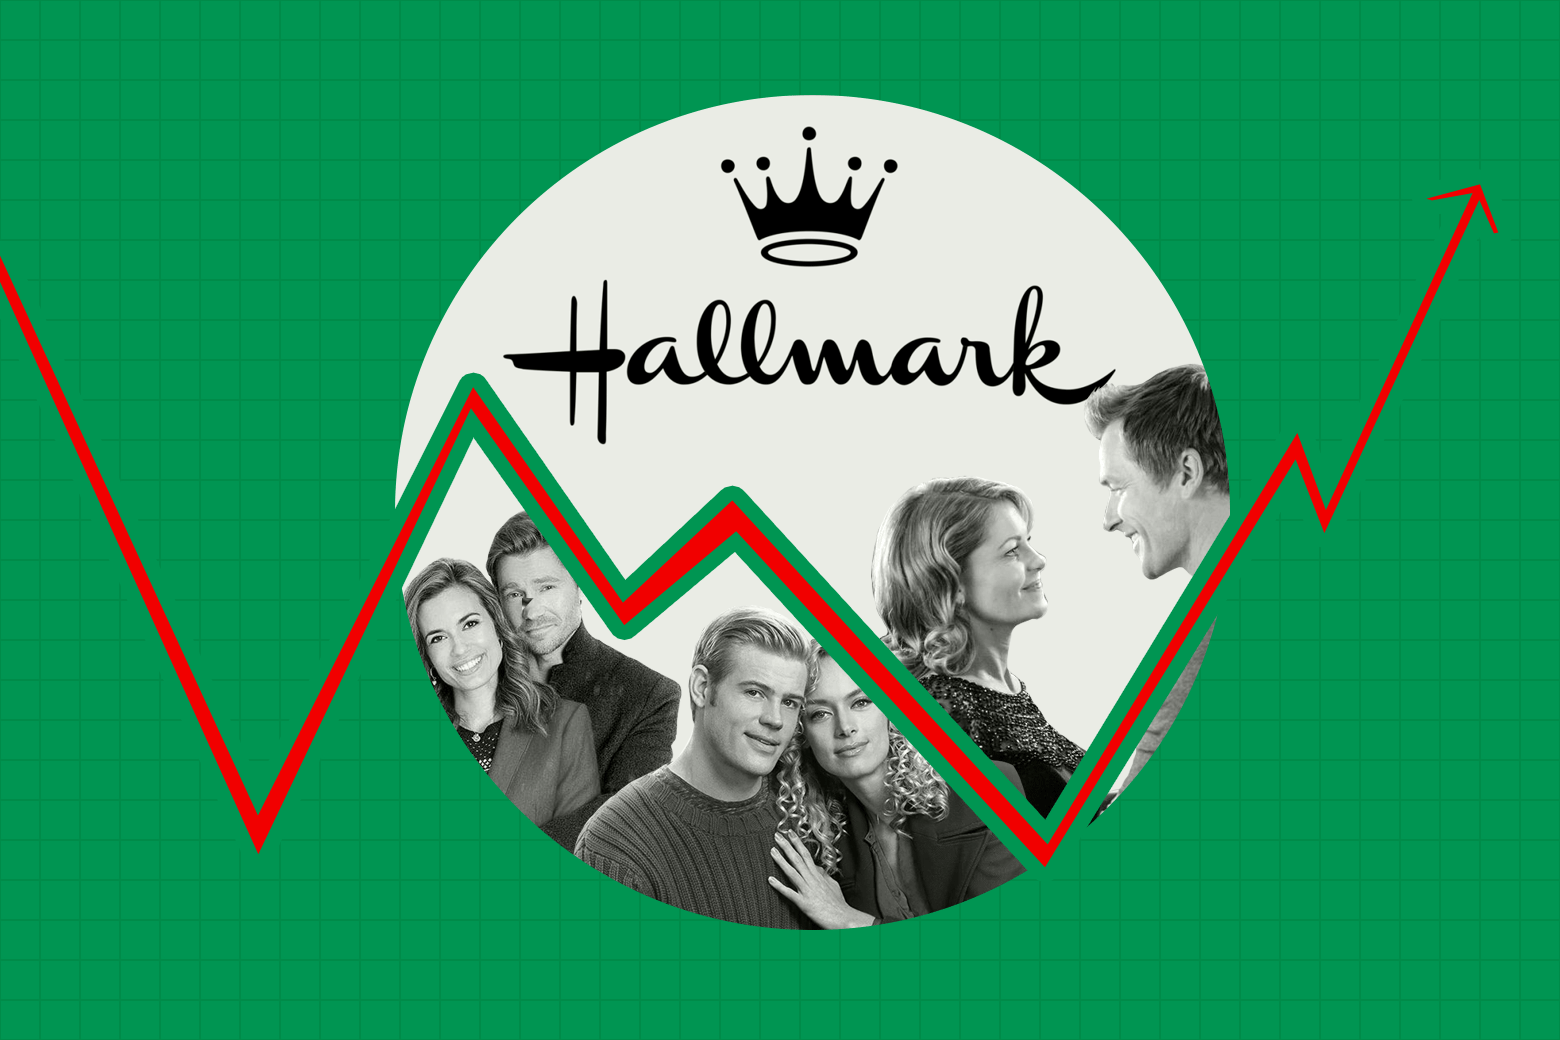 Hallmark crown logo above three happy white hetero couples from Hallmark movies